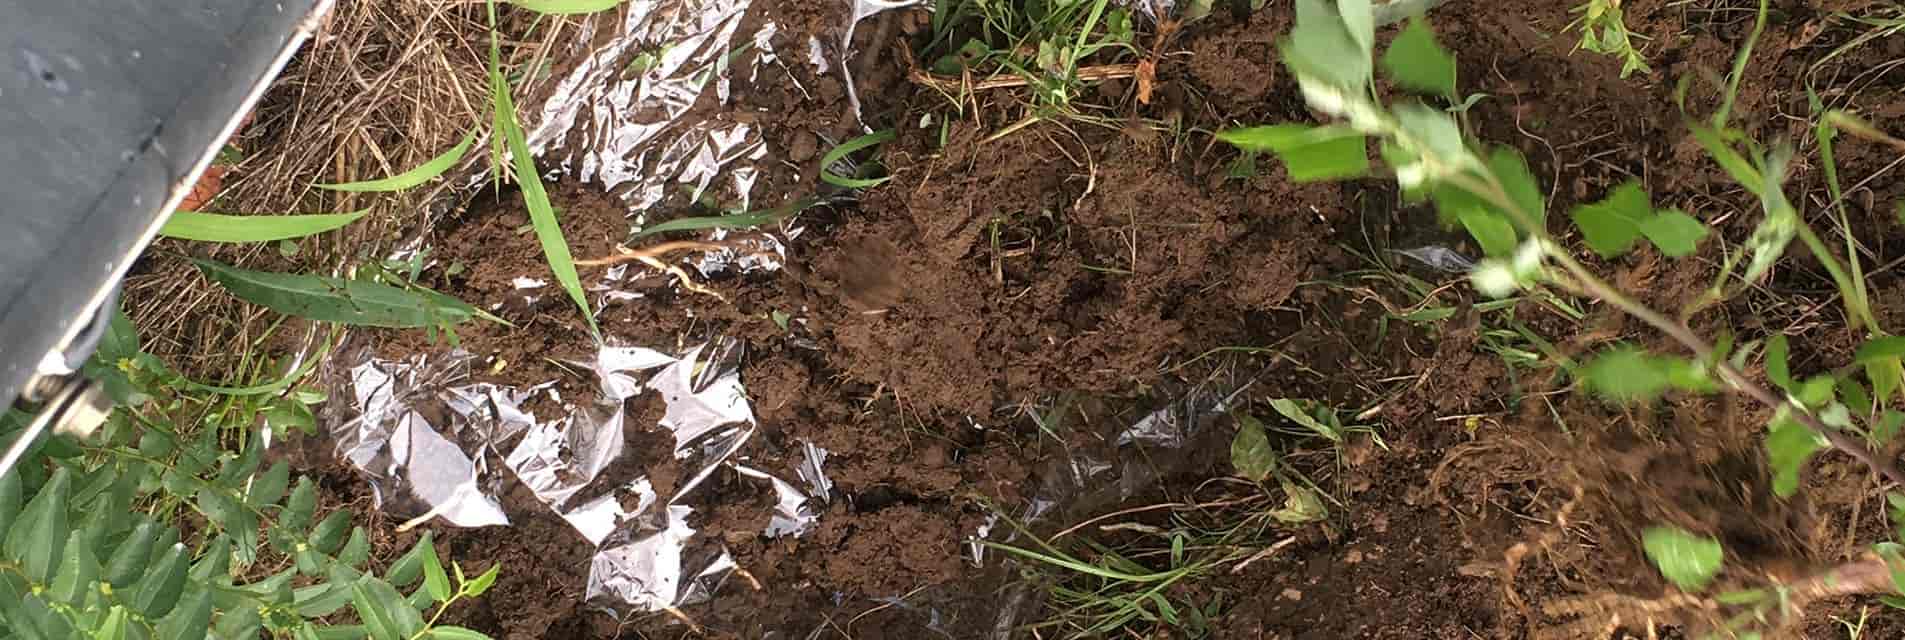 Biodegradation Behaviour of Bio-based Materials Under Nature Soil Conditions